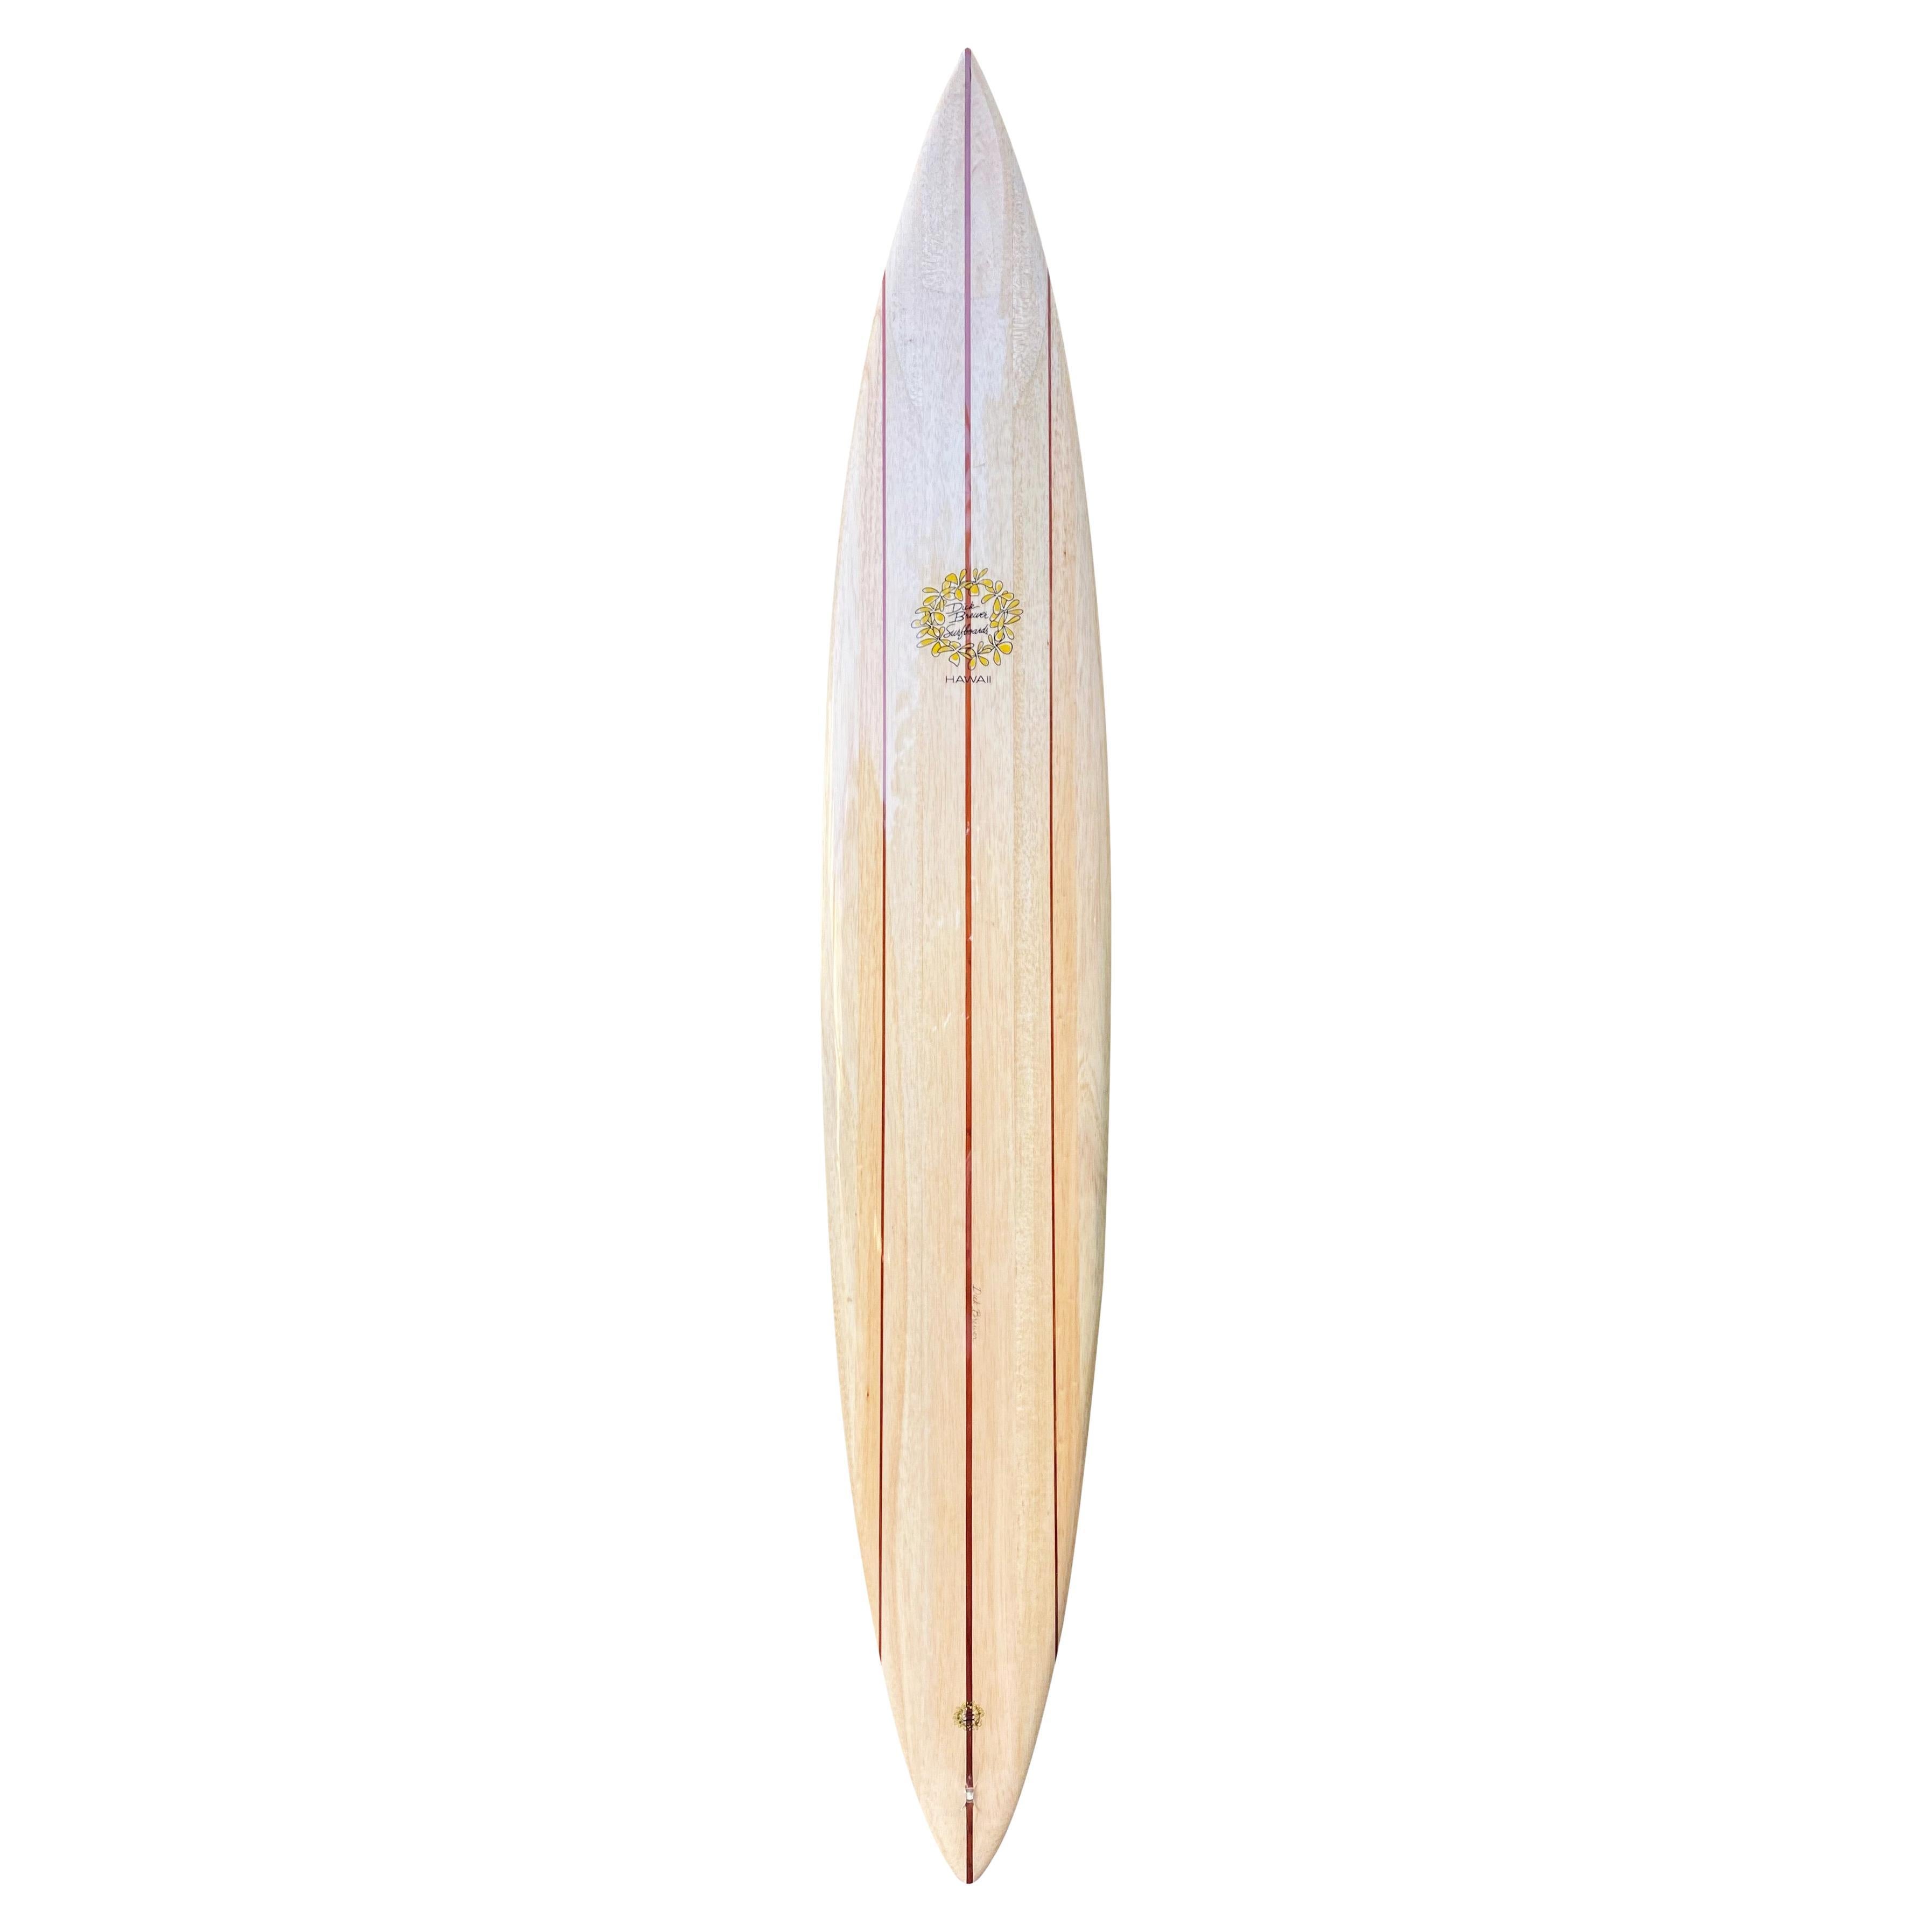 Dick Brewer Hand Shaped Balsawood Surfboard